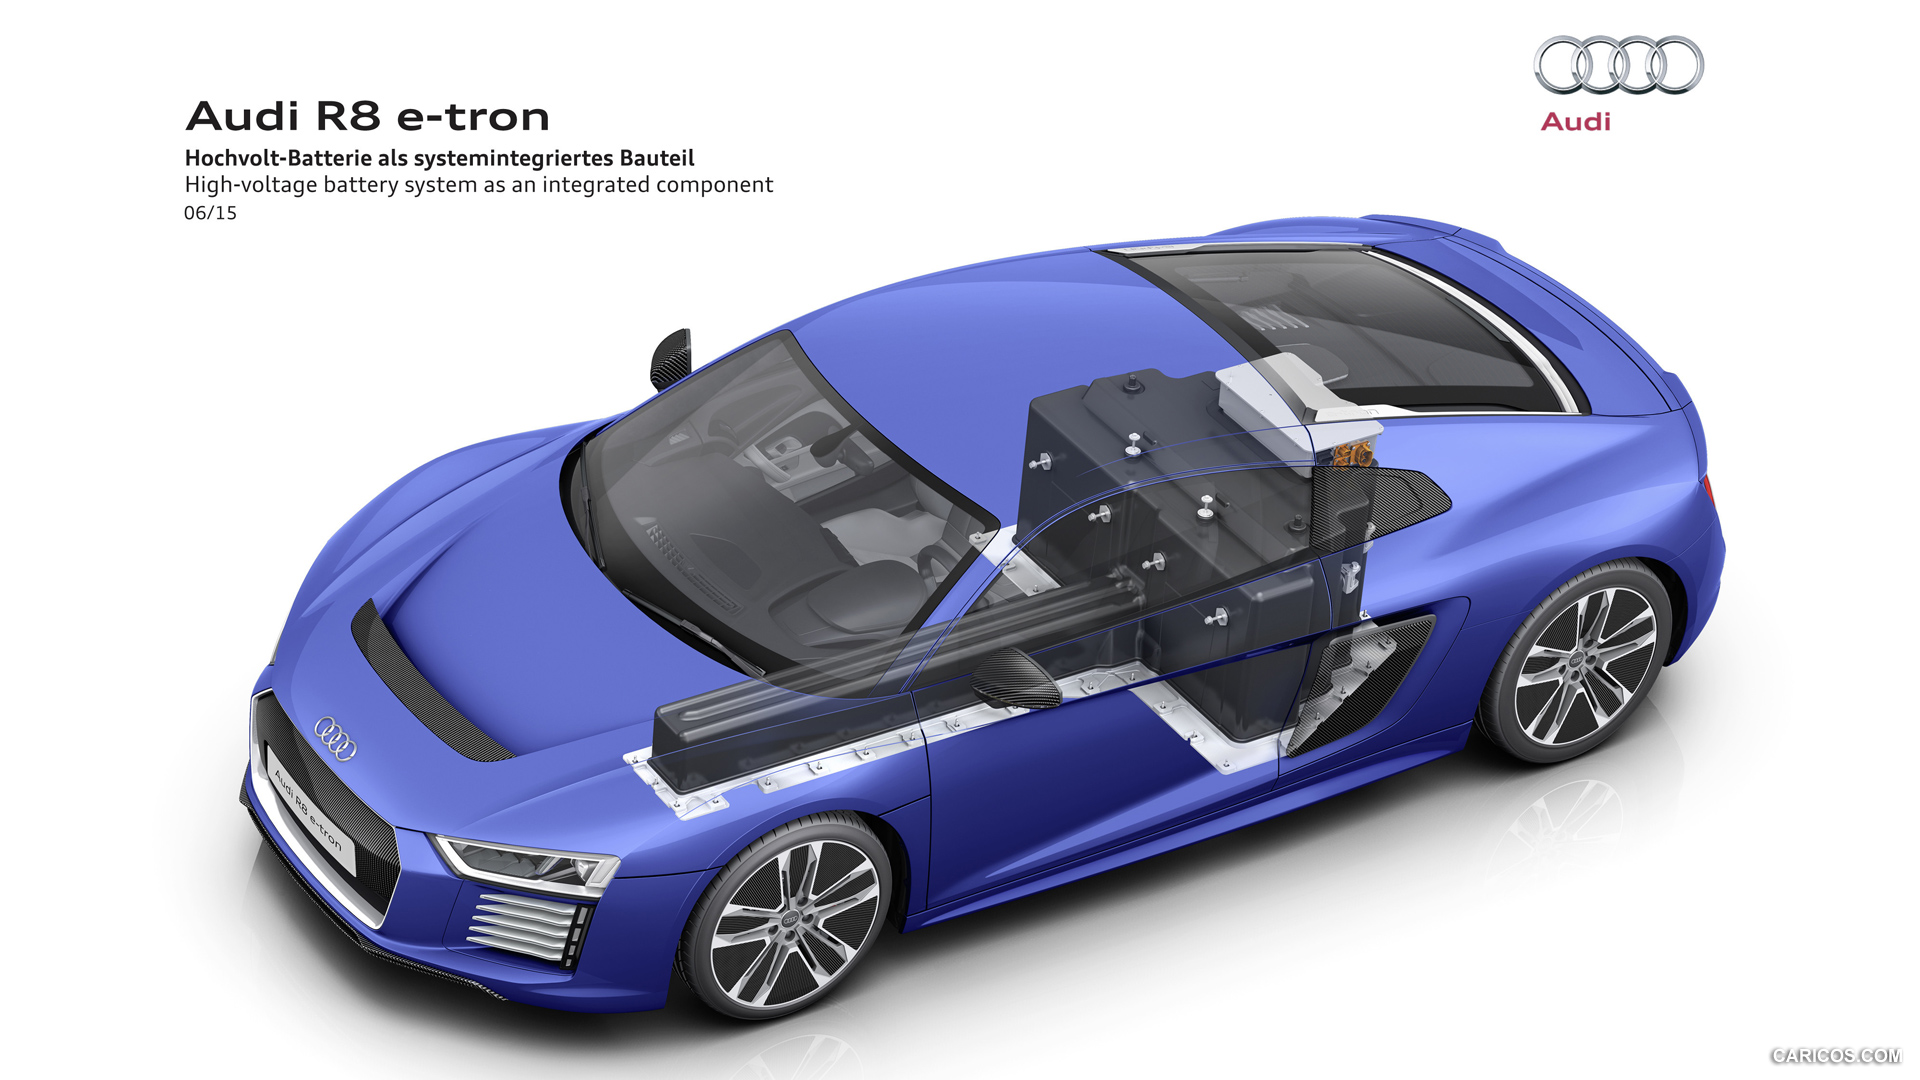 2016 Audi R8 etron  HighVoltage Battery System  HD Wallpaper 26 